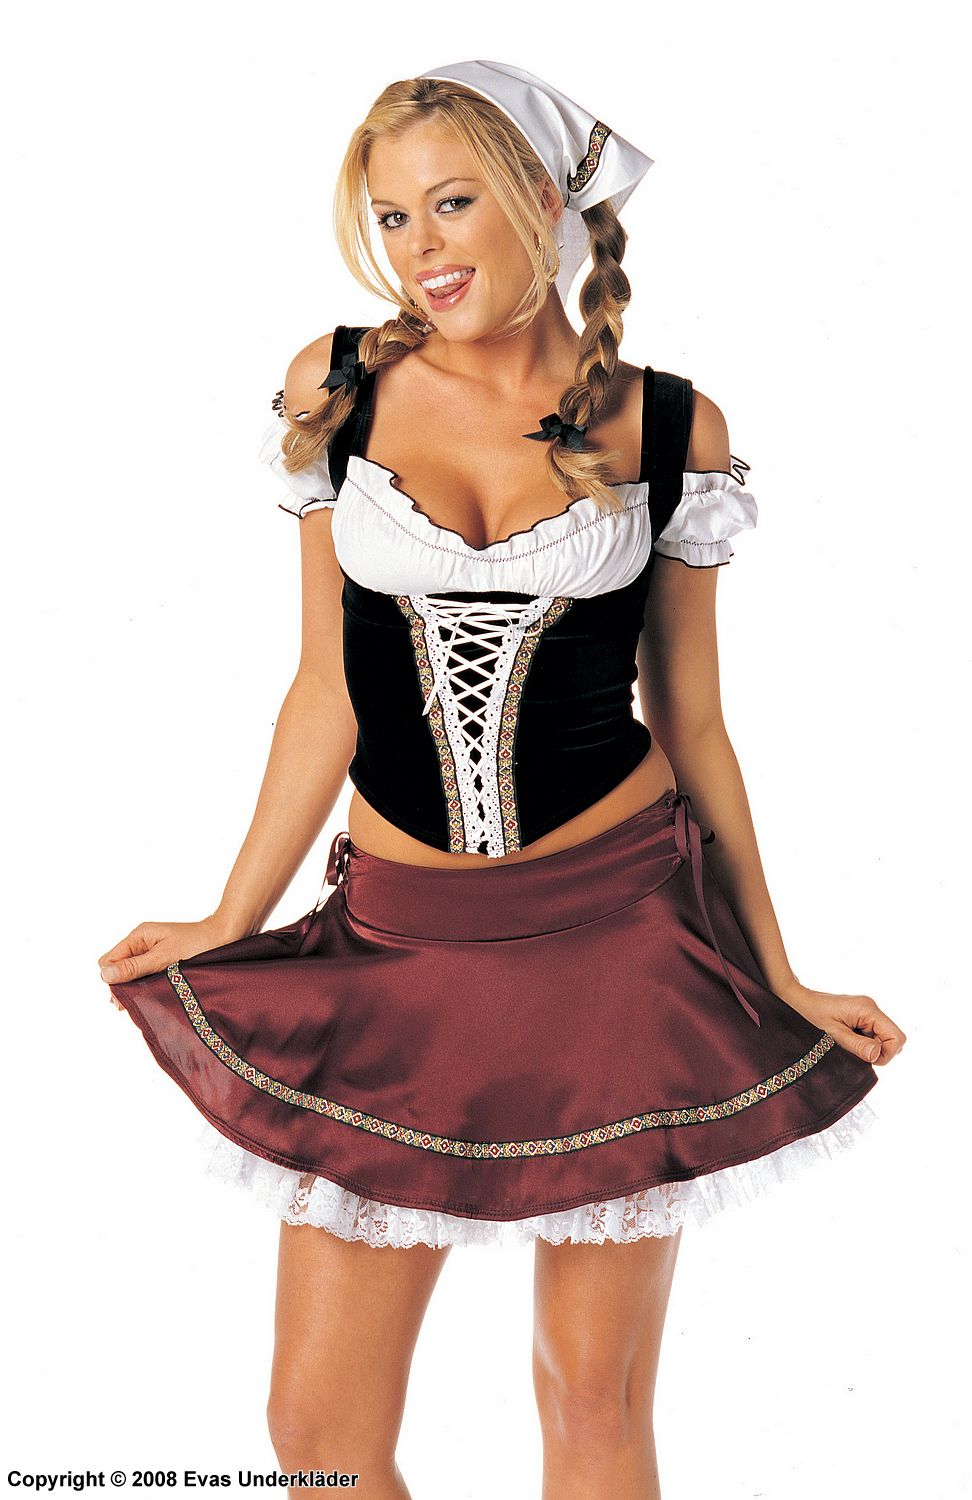 Fraulein Costume